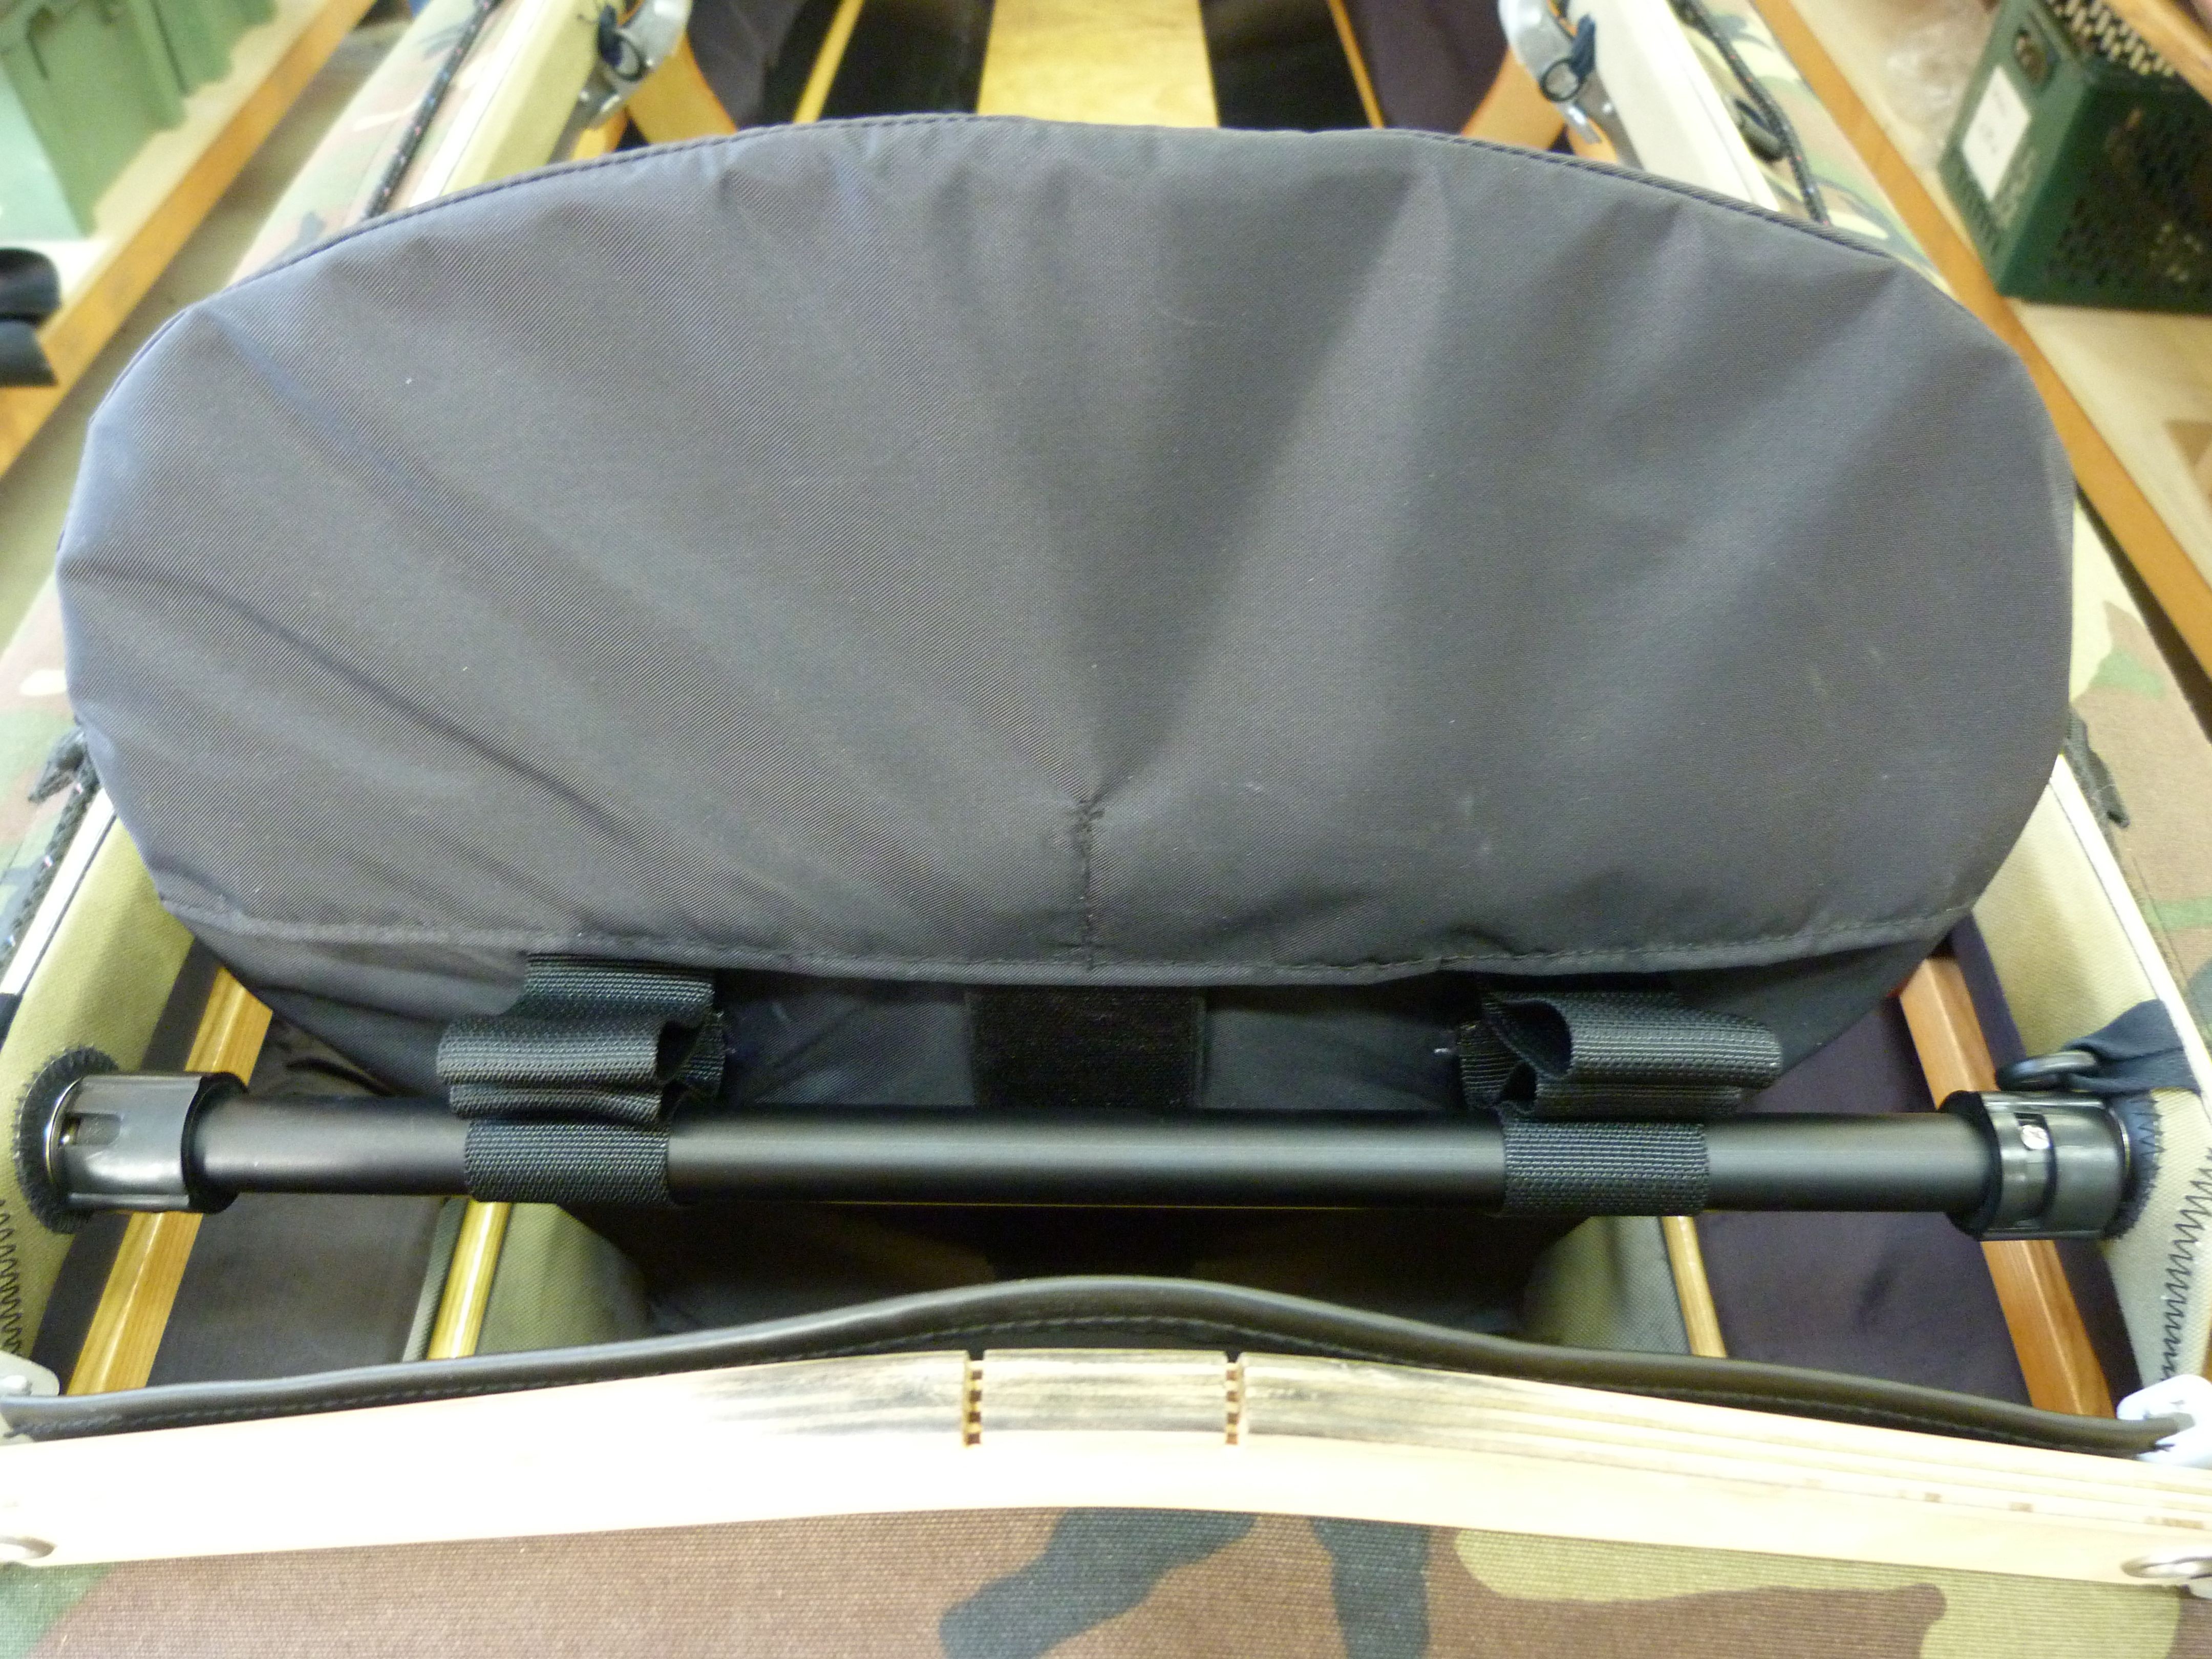 Add-on kit for Ergo backrest, sliding seat - Aerius 380